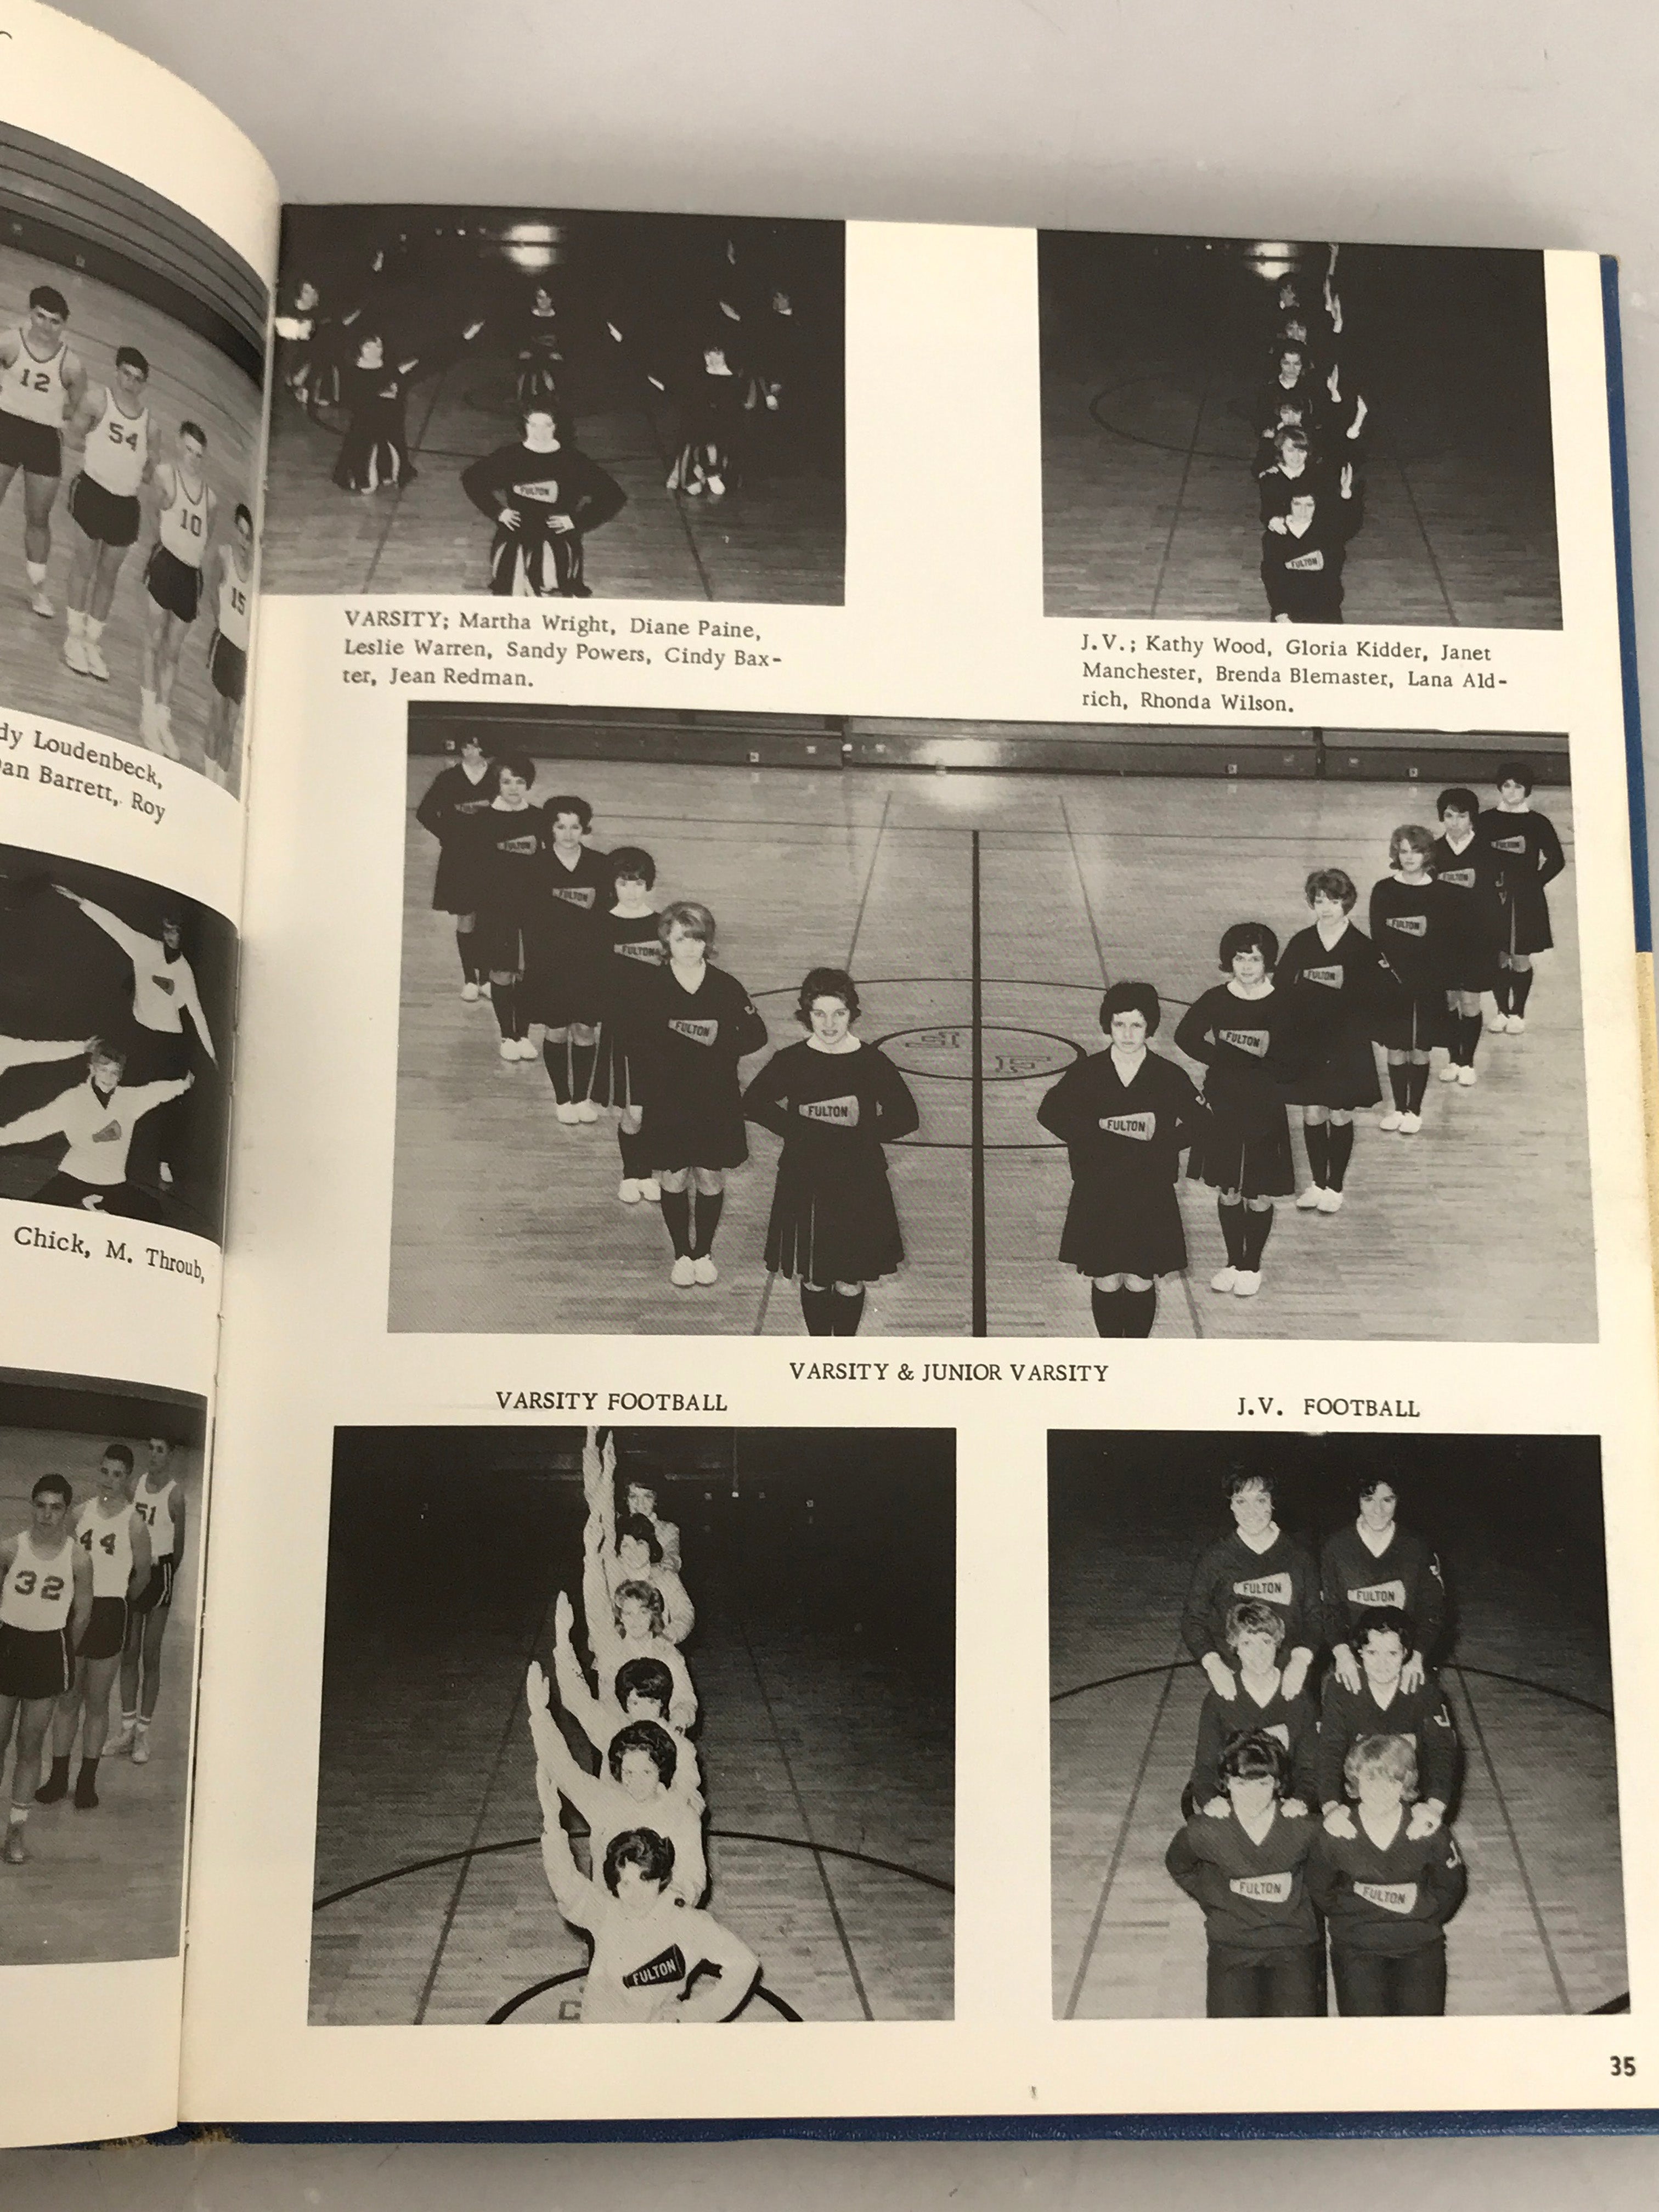 1965 Fulton High School Yearbook Middleton, Michigan